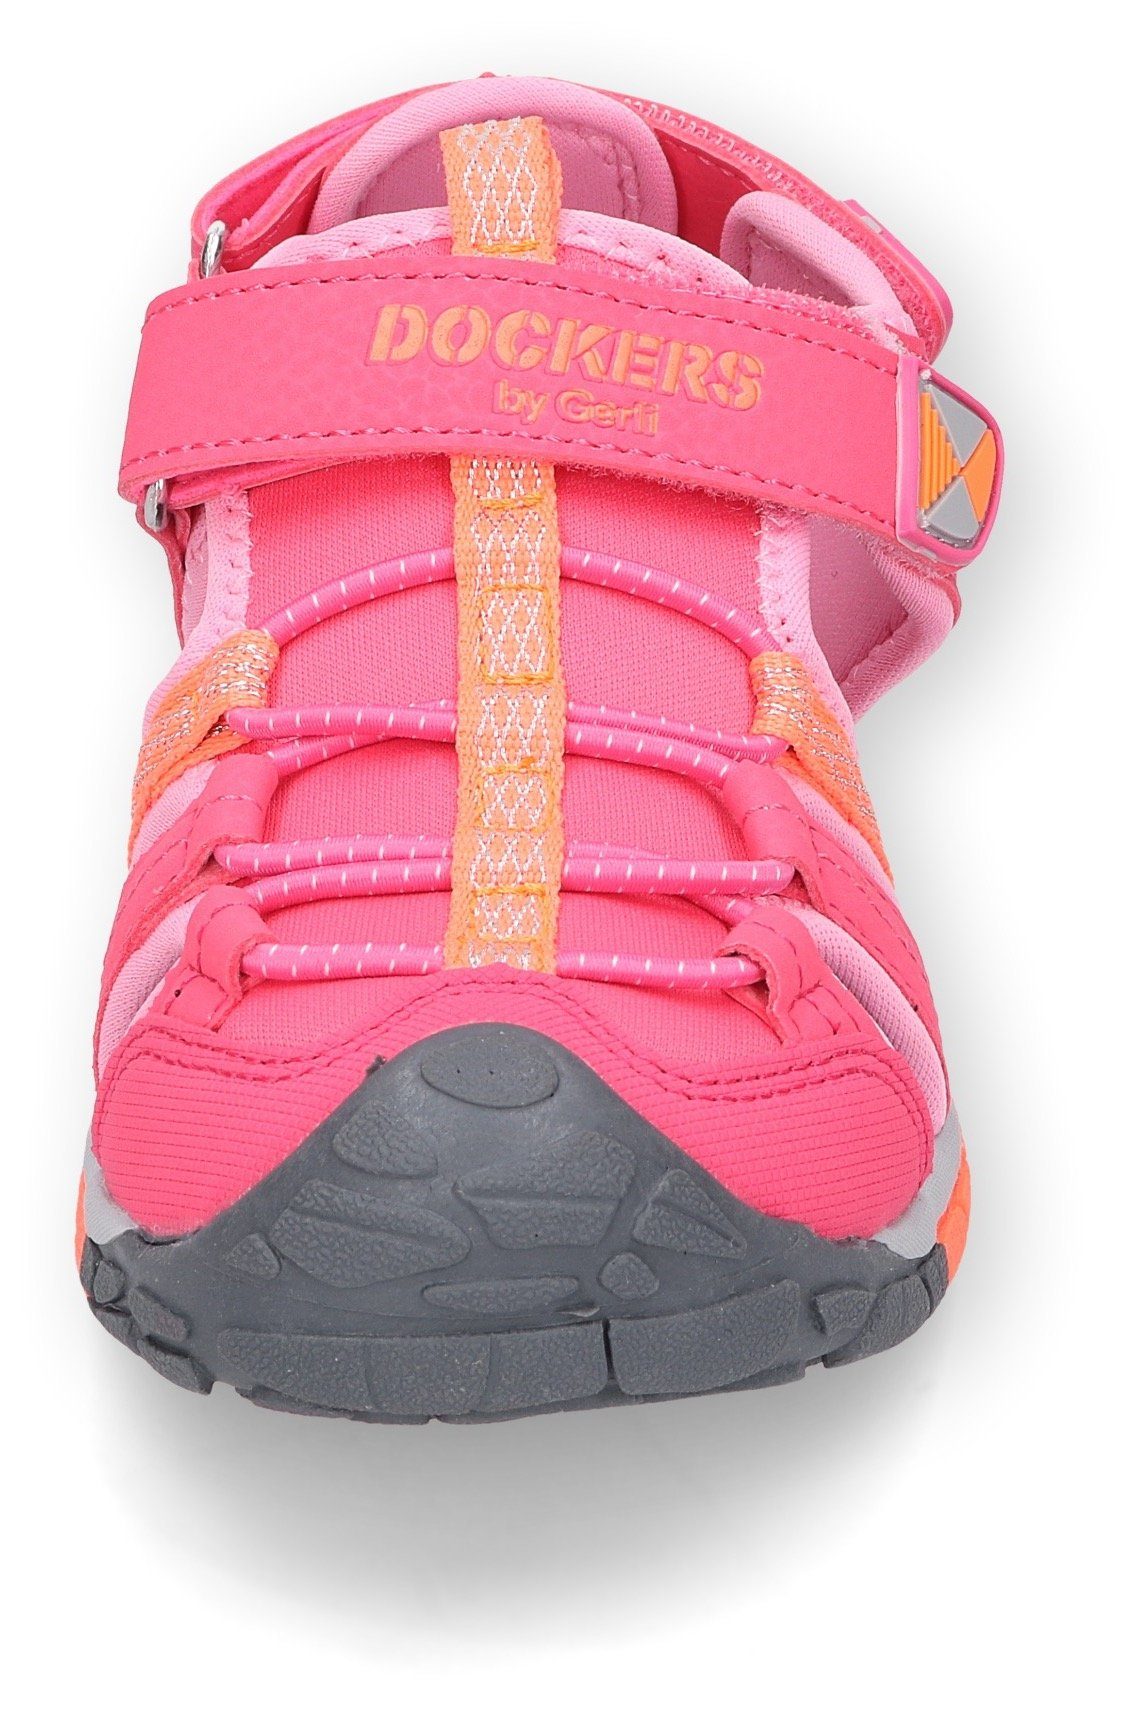 Gerli by Dockers Riemchensandale kontrastfarbenen mit pink-rosa Details